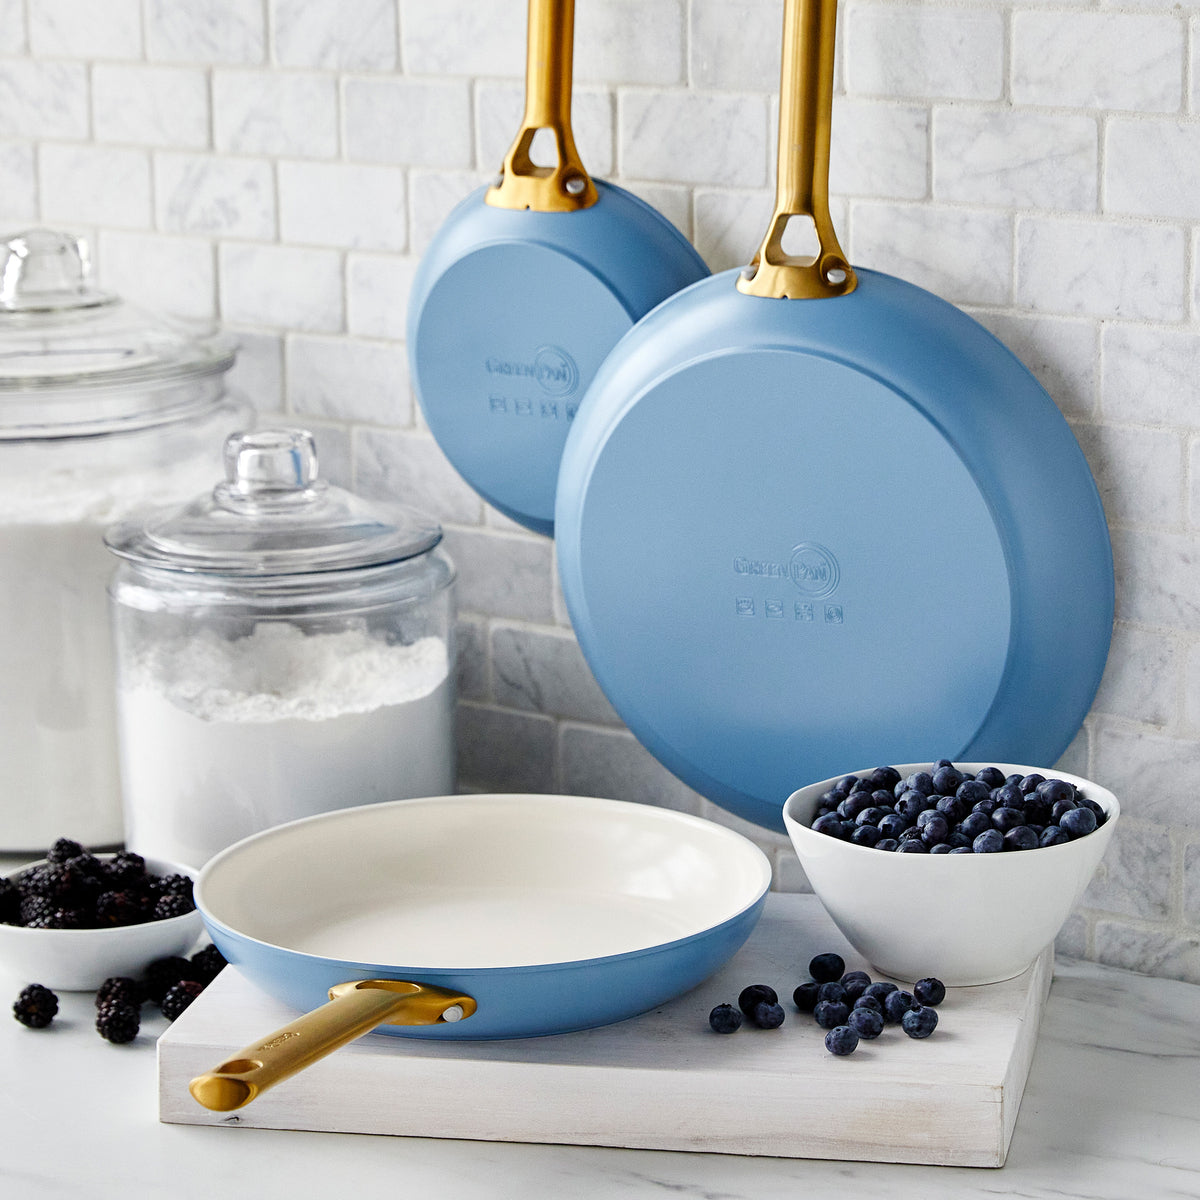 Reserve Ceramic Nonstick 8-Piece Cookware Set | Smoky Blue with Gold-Tone  Handles